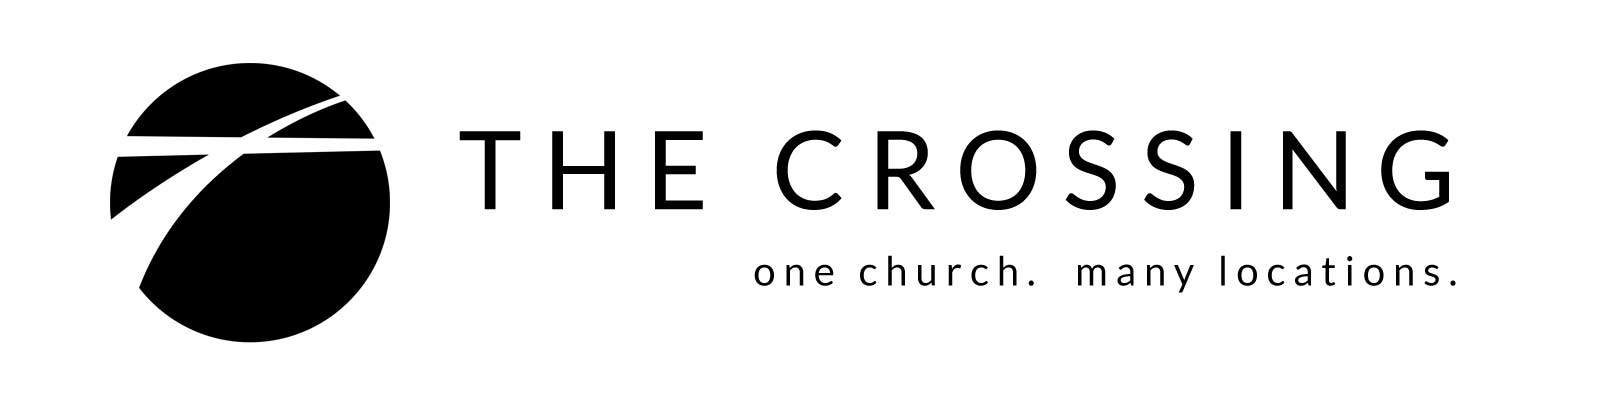 The Crossing Church logo